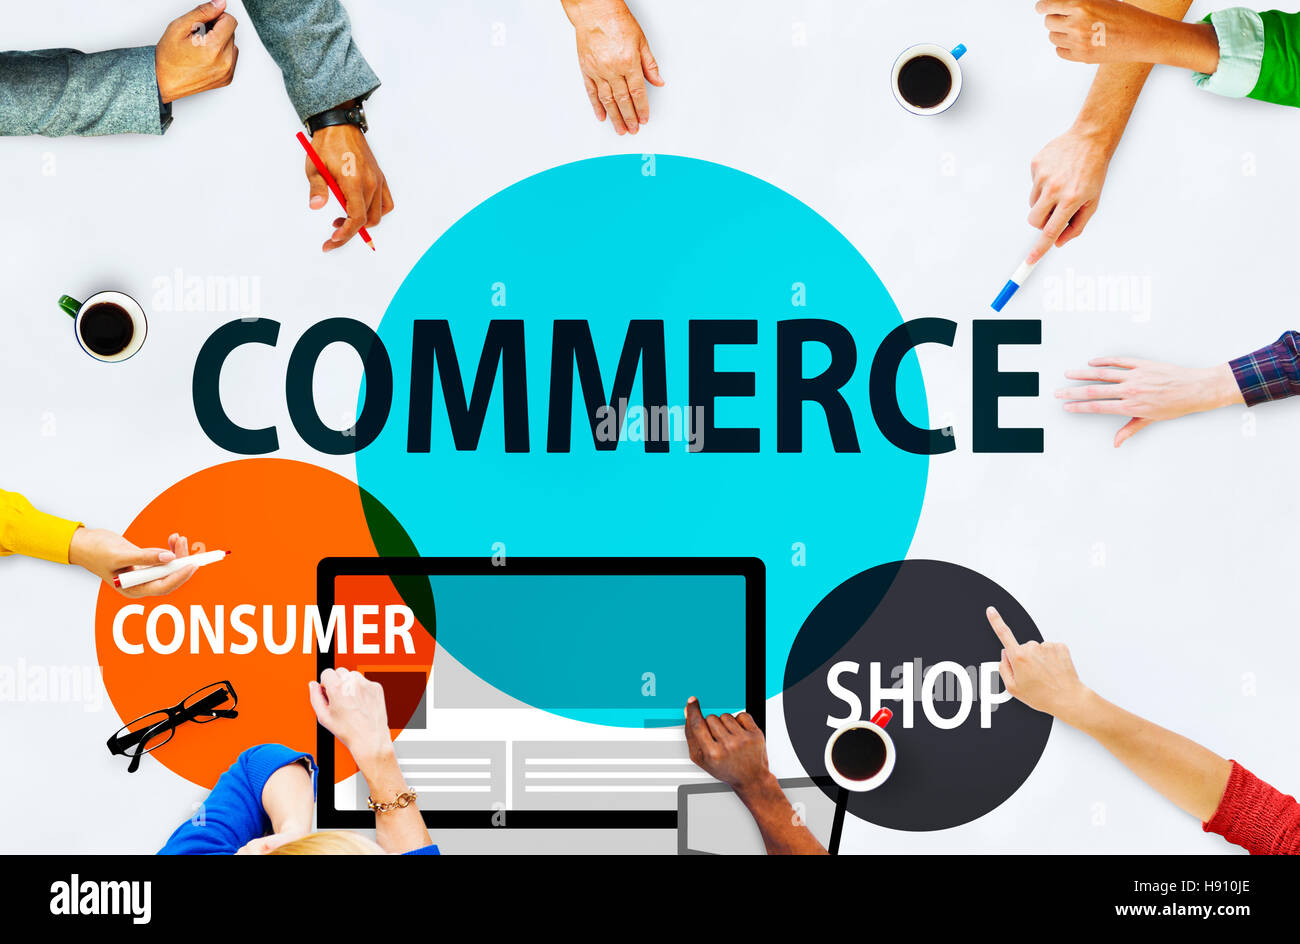 Commerce Consumer Shop Shopping Marketing Concept Stock Photo